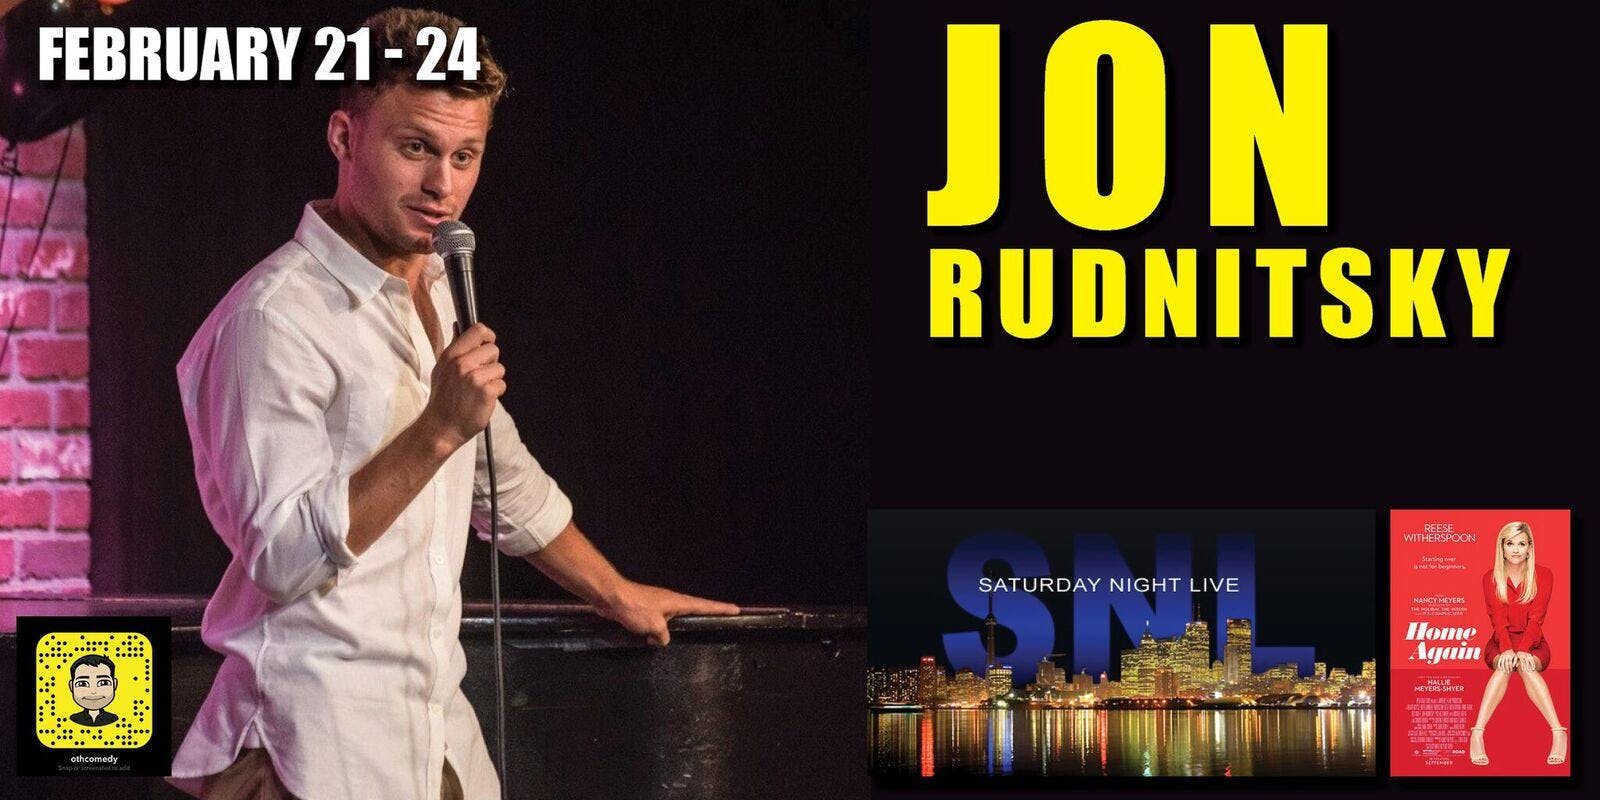 Comedian Jon Rudnitsky from SNL live in Naples, Florida